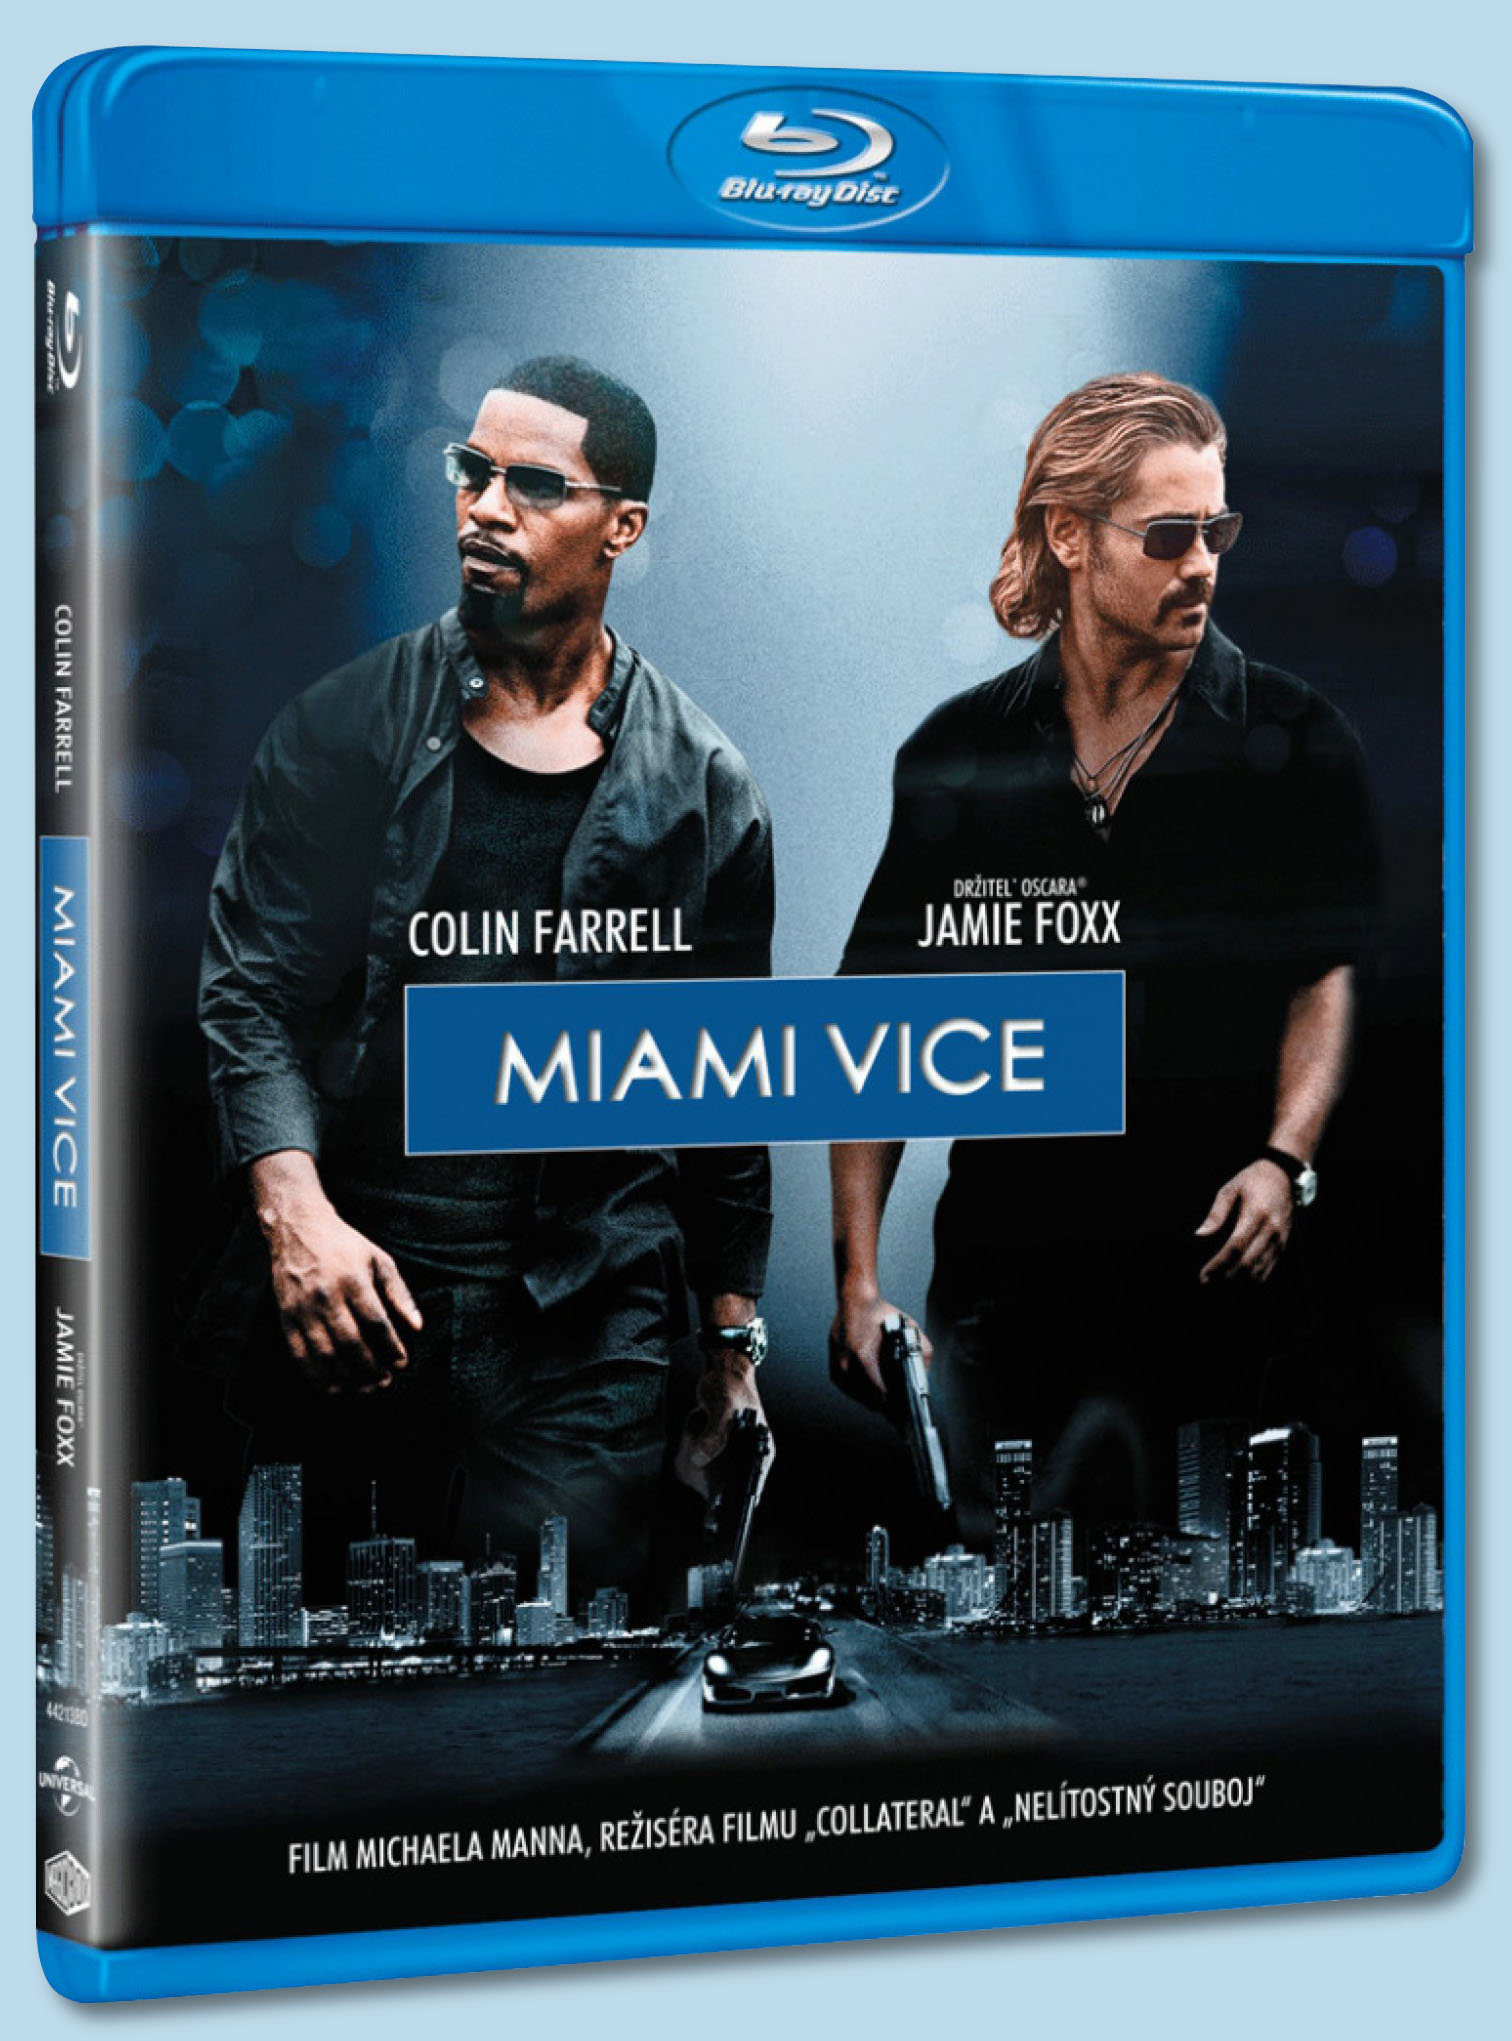 Stiahni si Blu-ray Filmy Miami Vice (2006)(CZ/EN)[1080p] = CSFD 71%